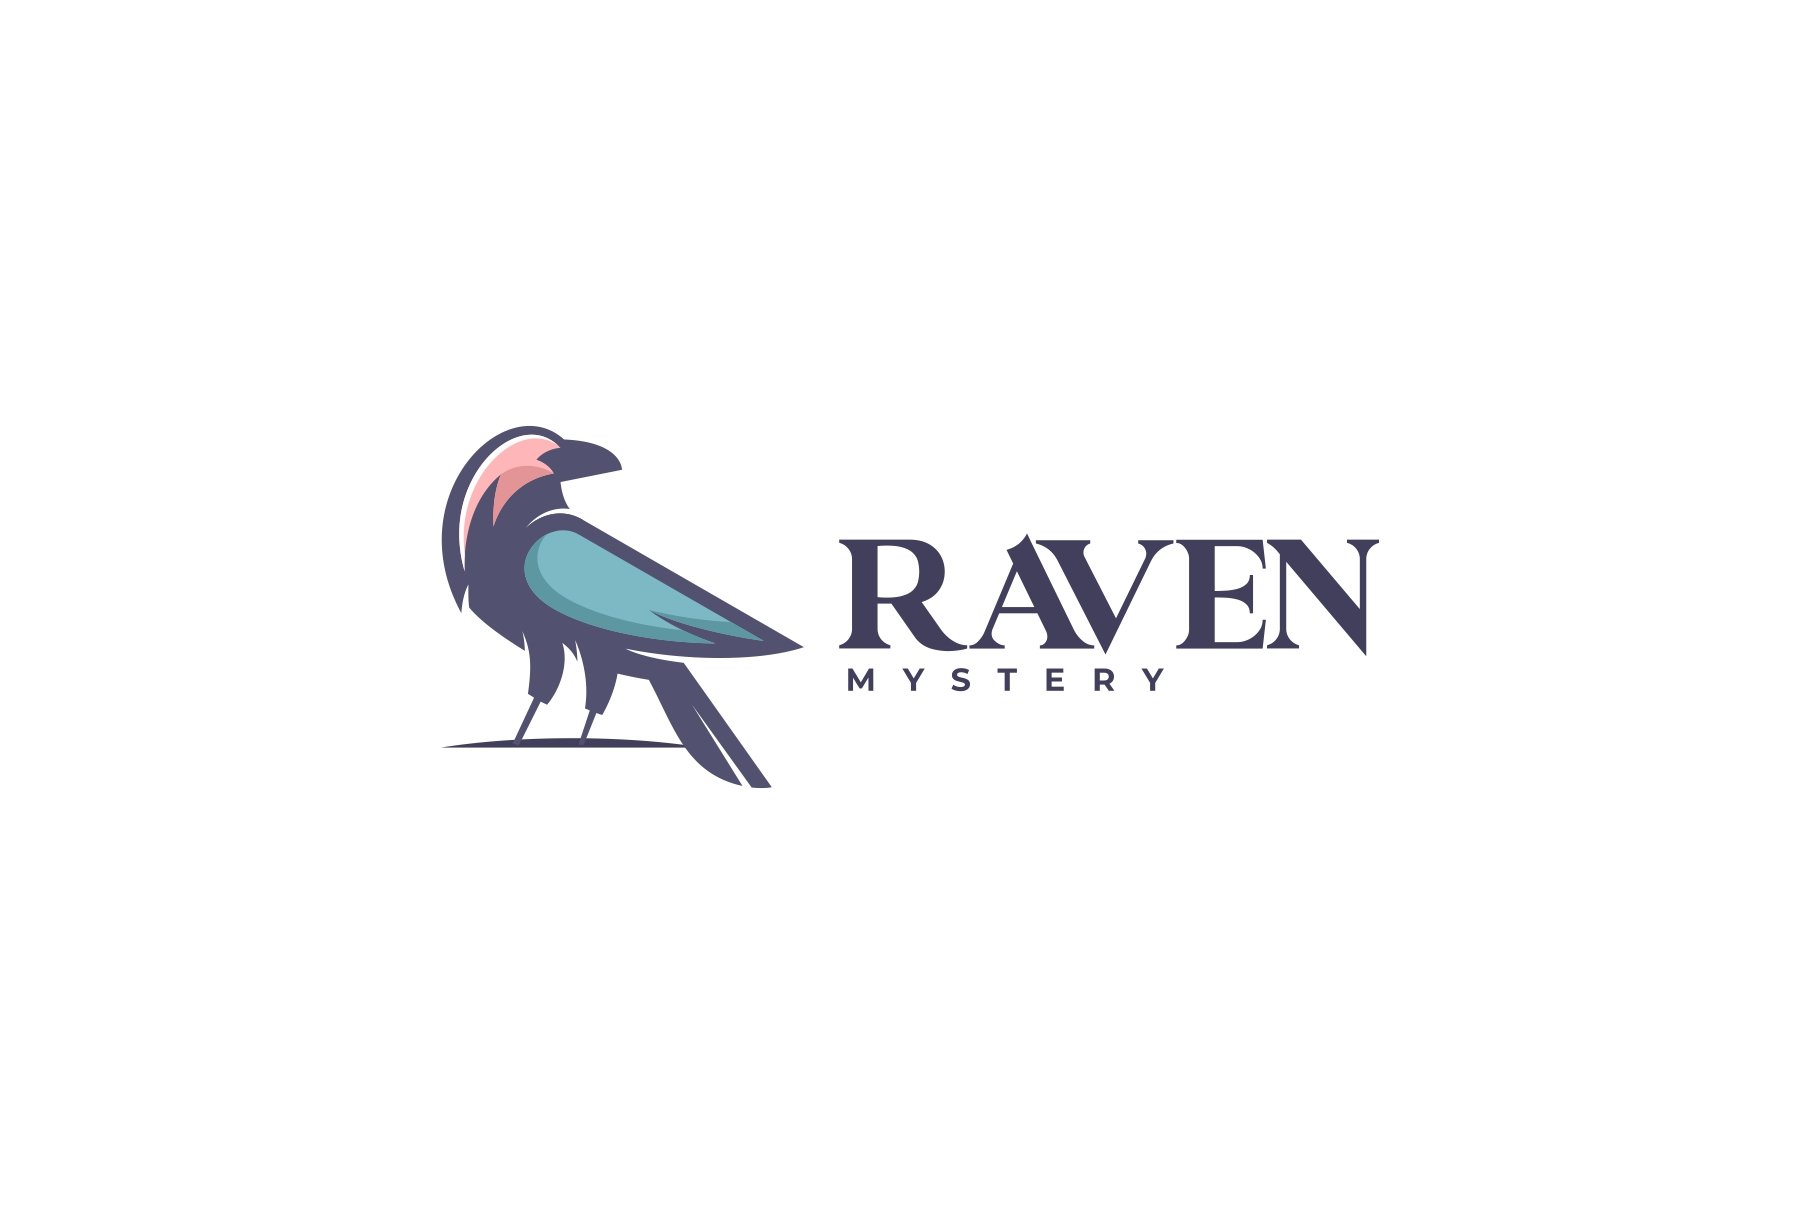 Raven Color Mascot Logo cover image.